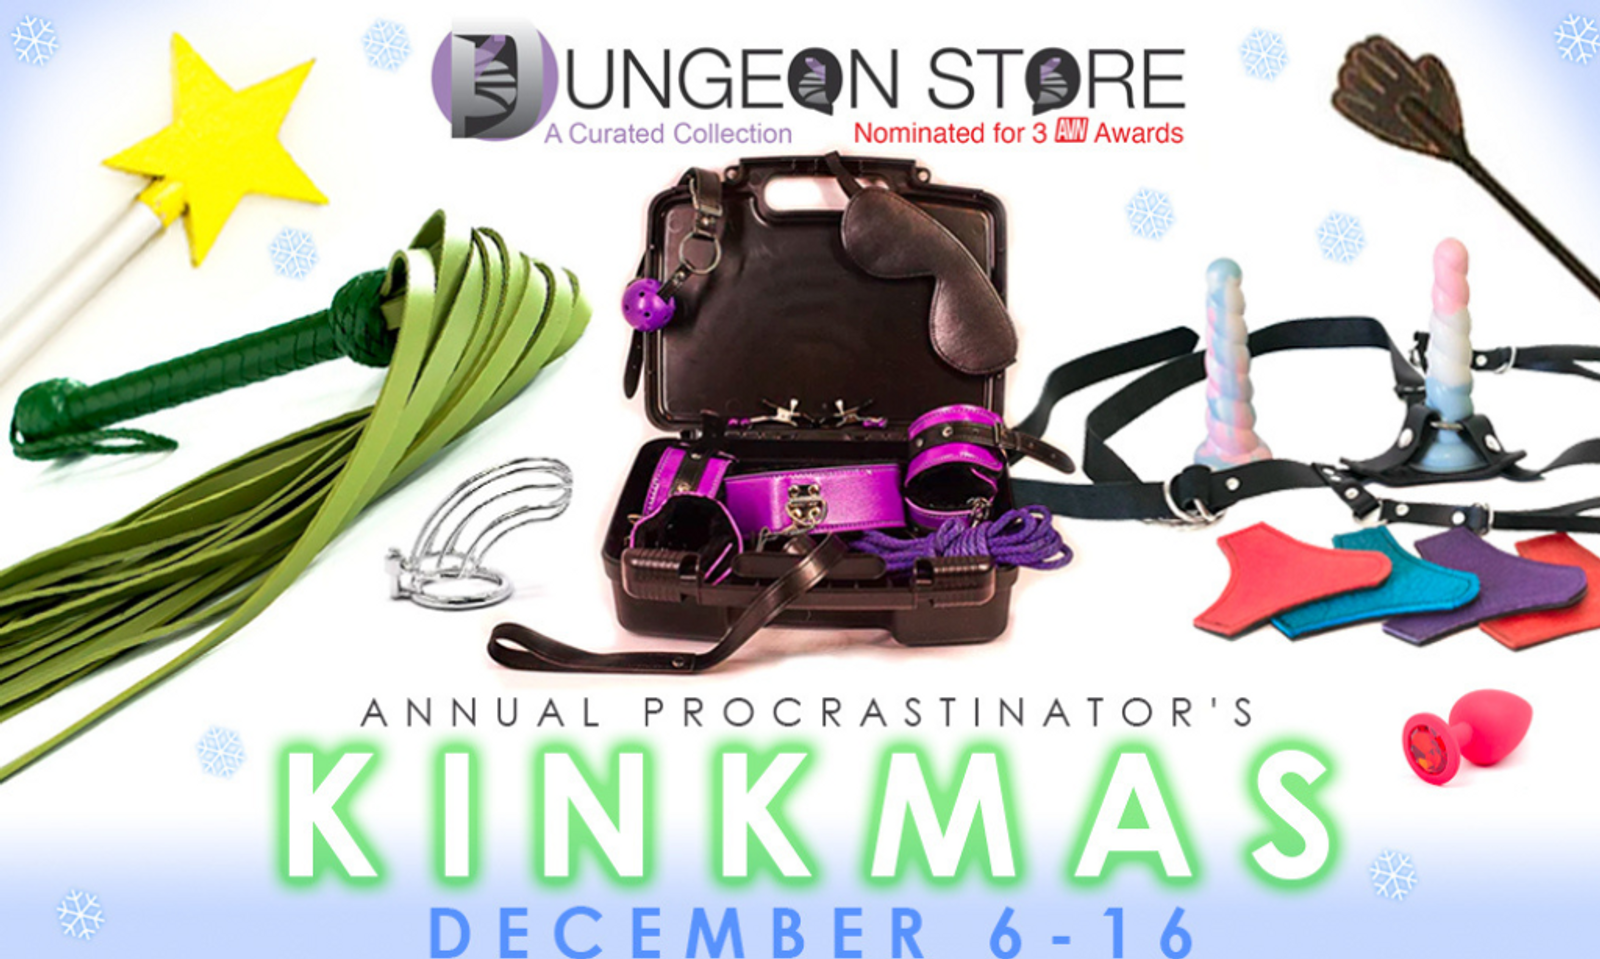 Procrastinator's Kinkmas Sale Returns at The Dungeon Store